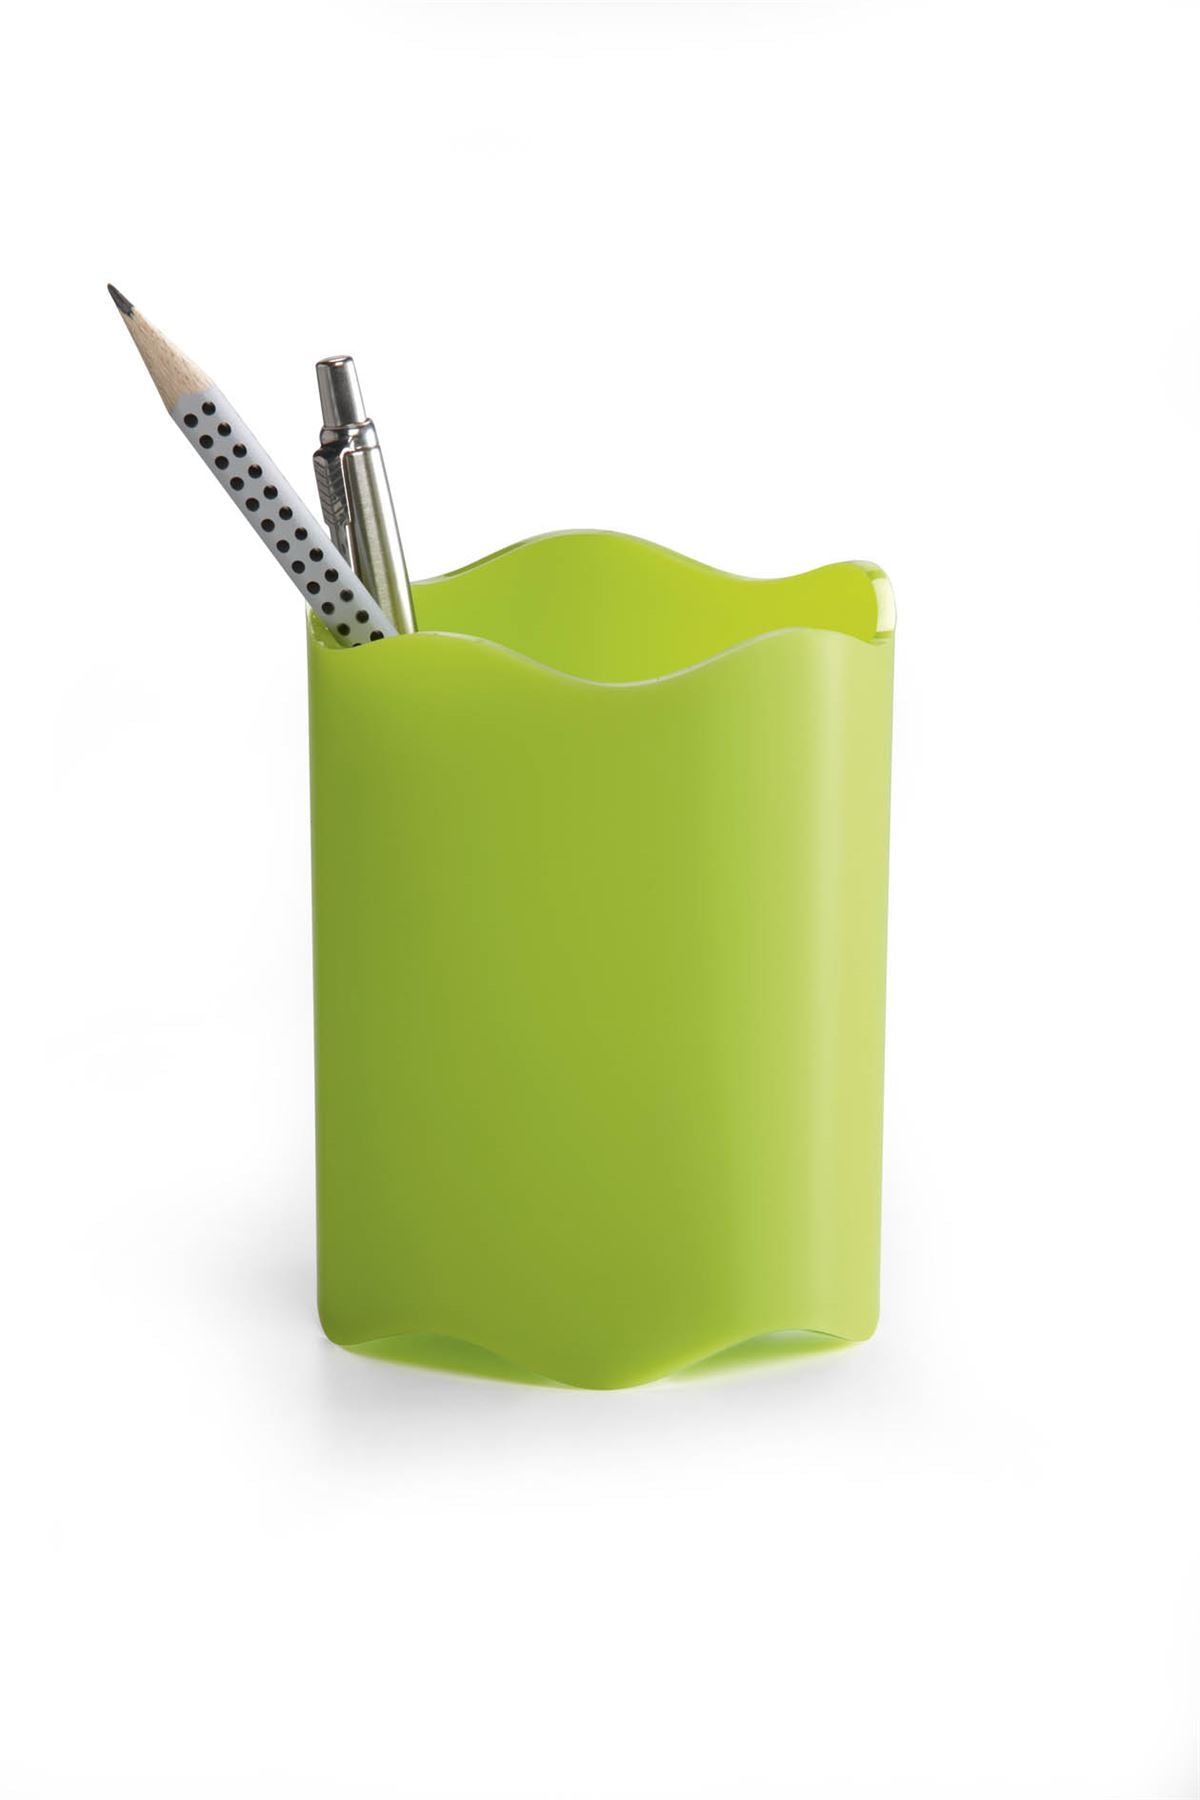 Durable TREND Pen Pot Pencil Holder Desk Tidy Organizer Cup | Green